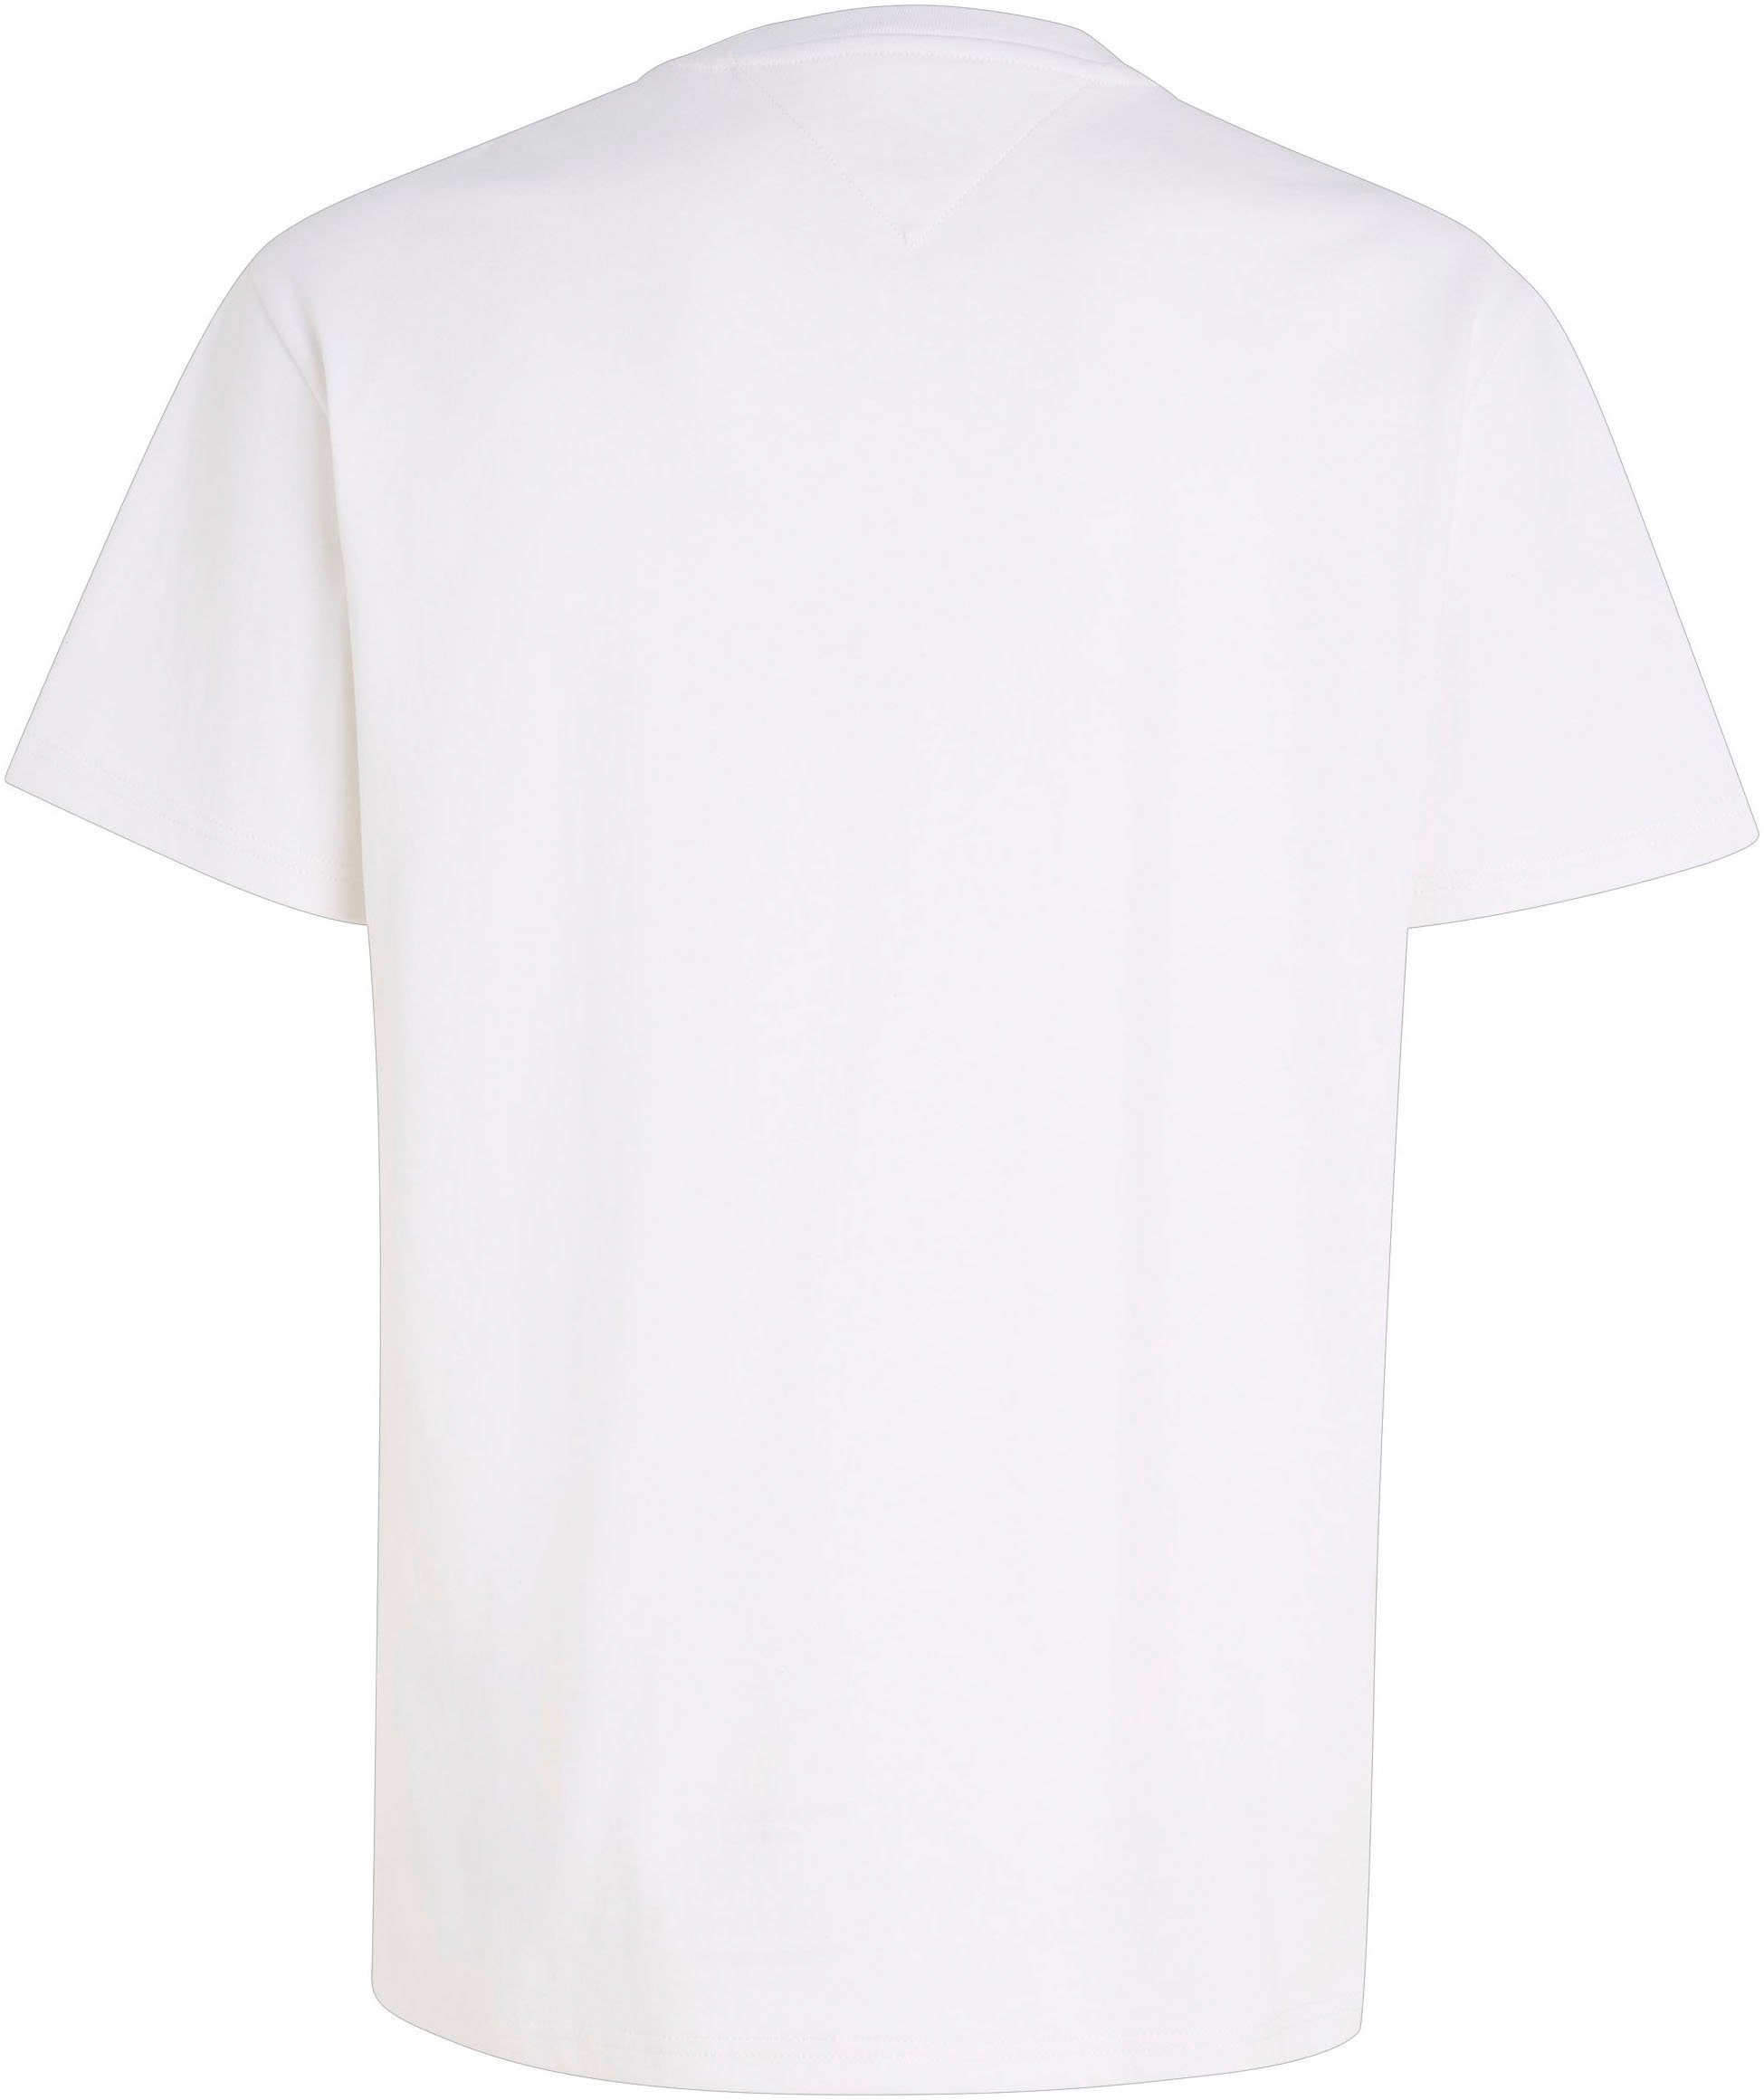 Tommy XS TOMMY BADGE TJM Jeans TEE White CLSC Rundhalsausschnitt T-Shirt mit